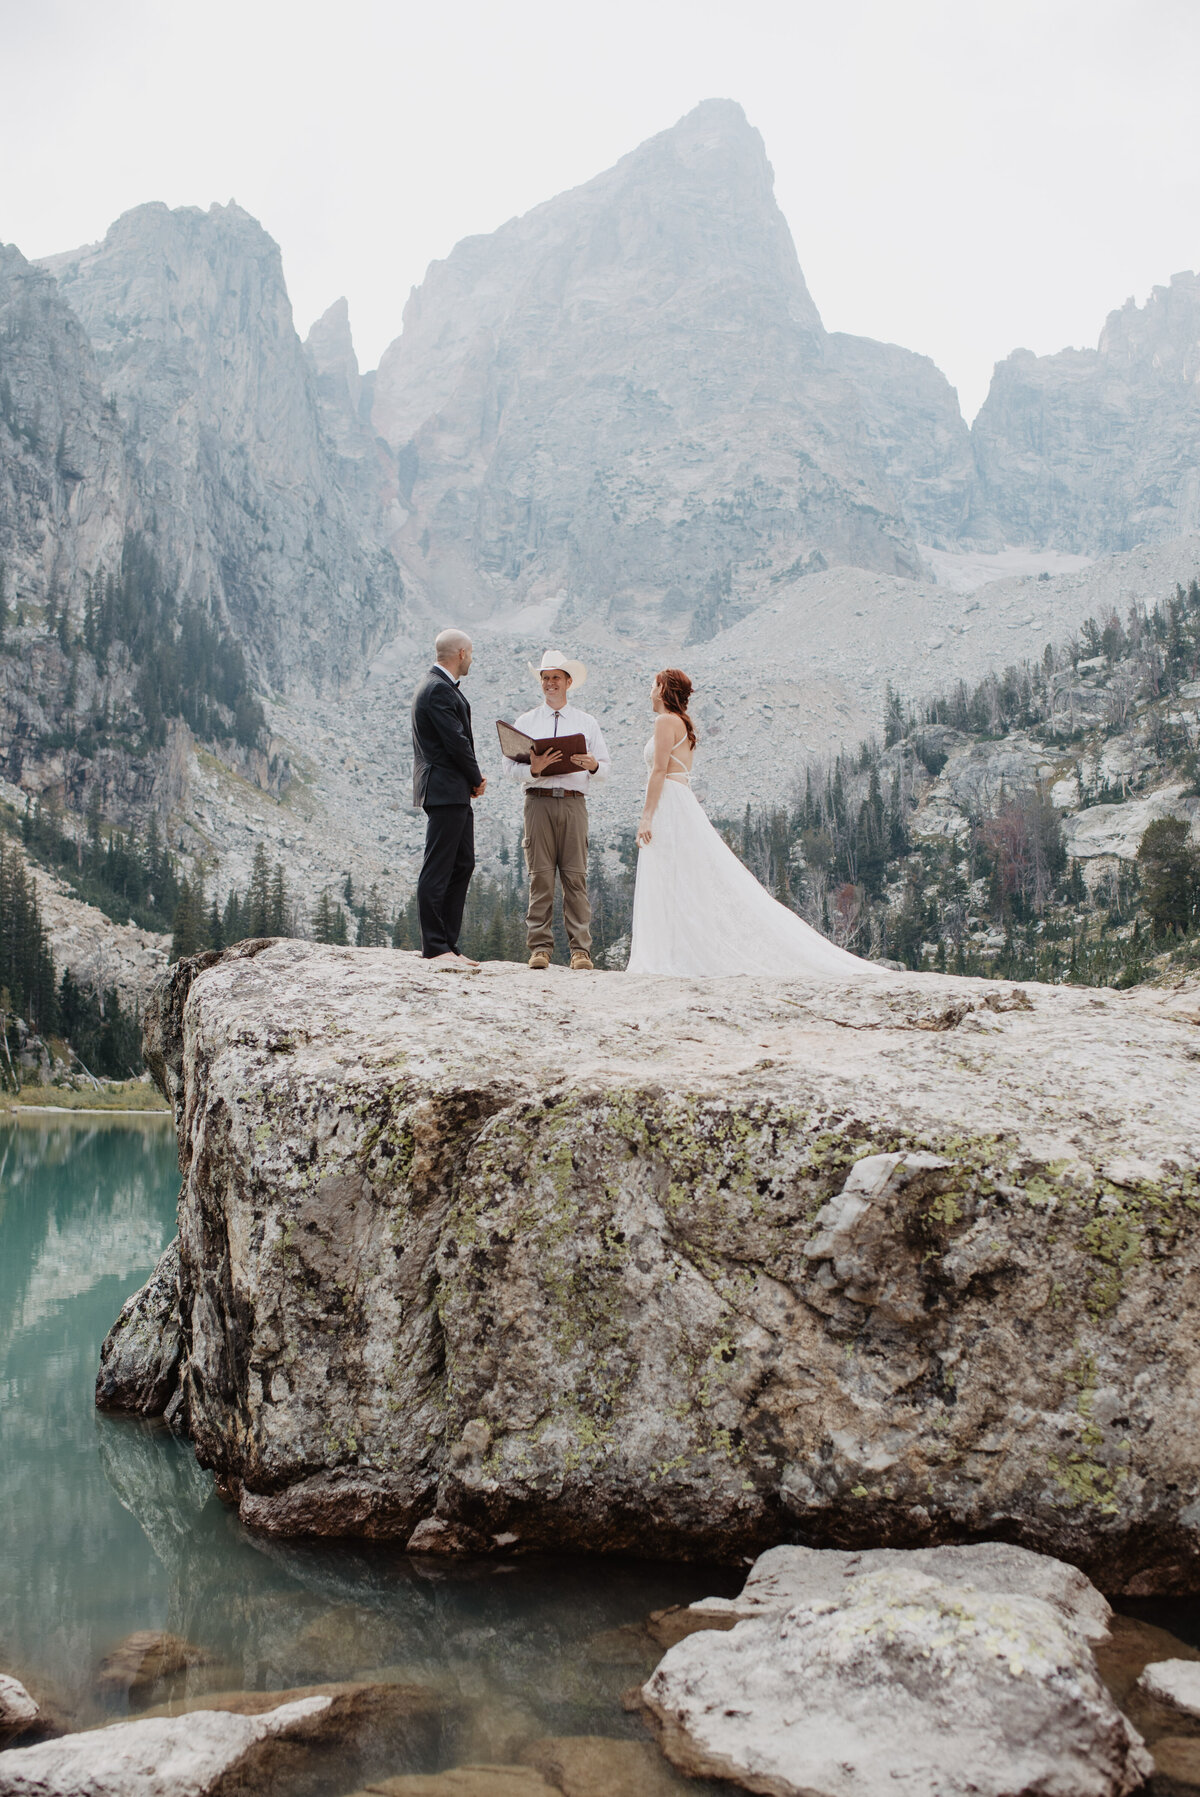 Jackson Hole photographers capture bride and groom during wedding ceremony